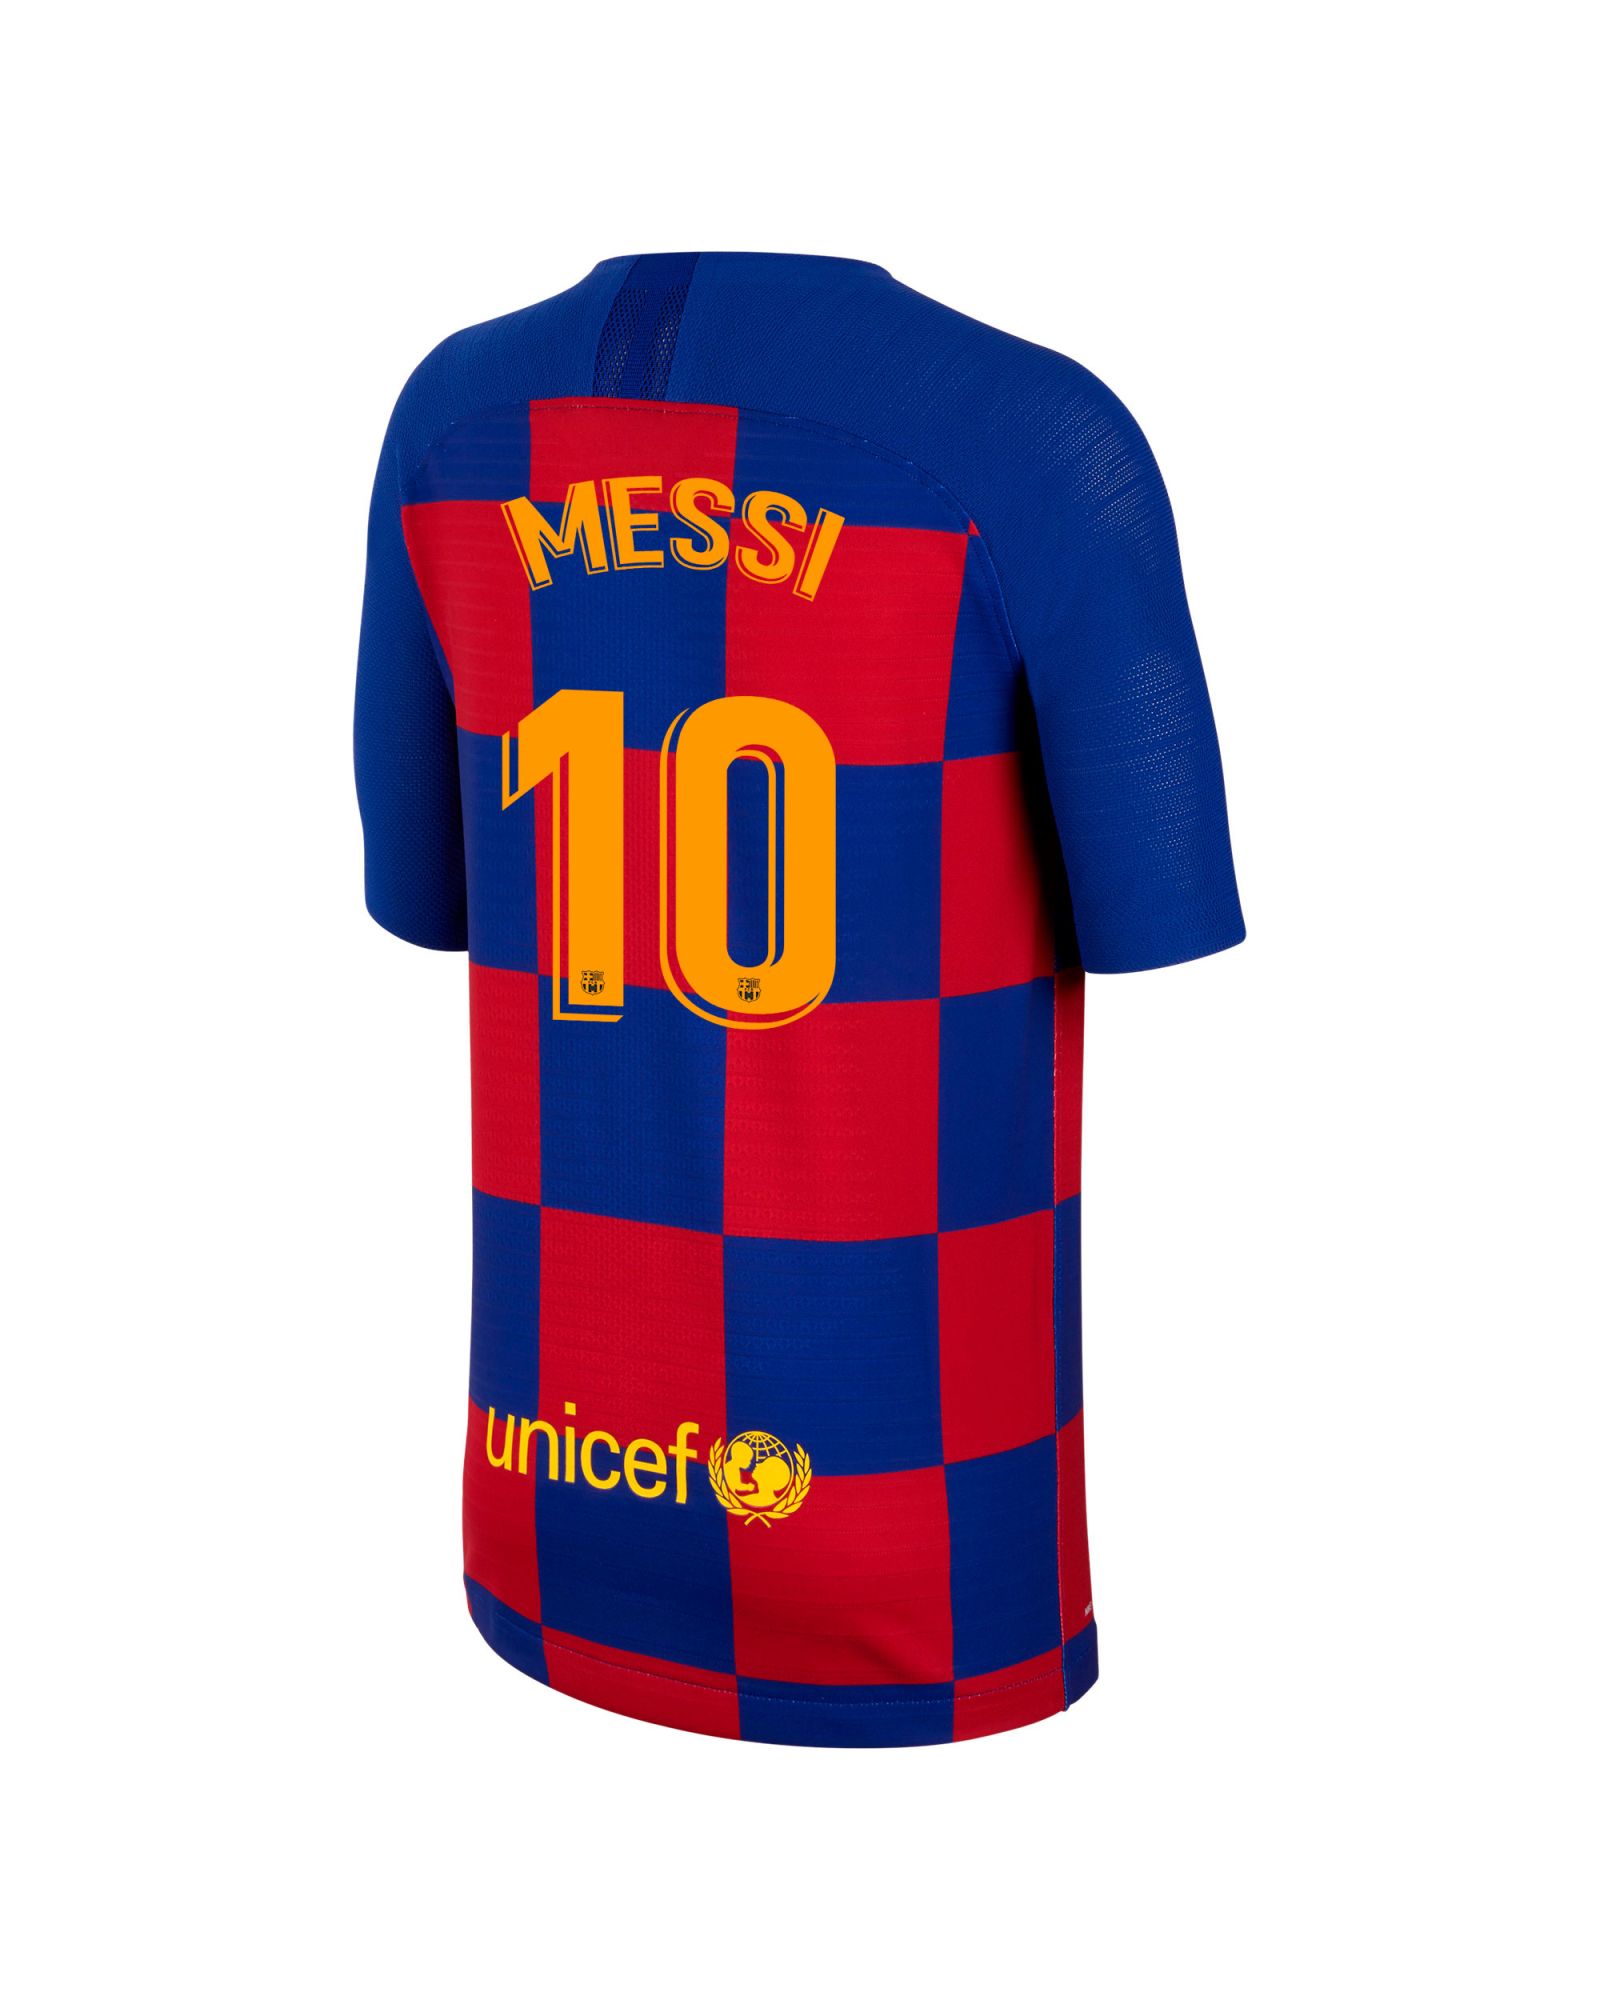 Camiseta 1ª FC Barcelona 2019/2020 Junior Messi